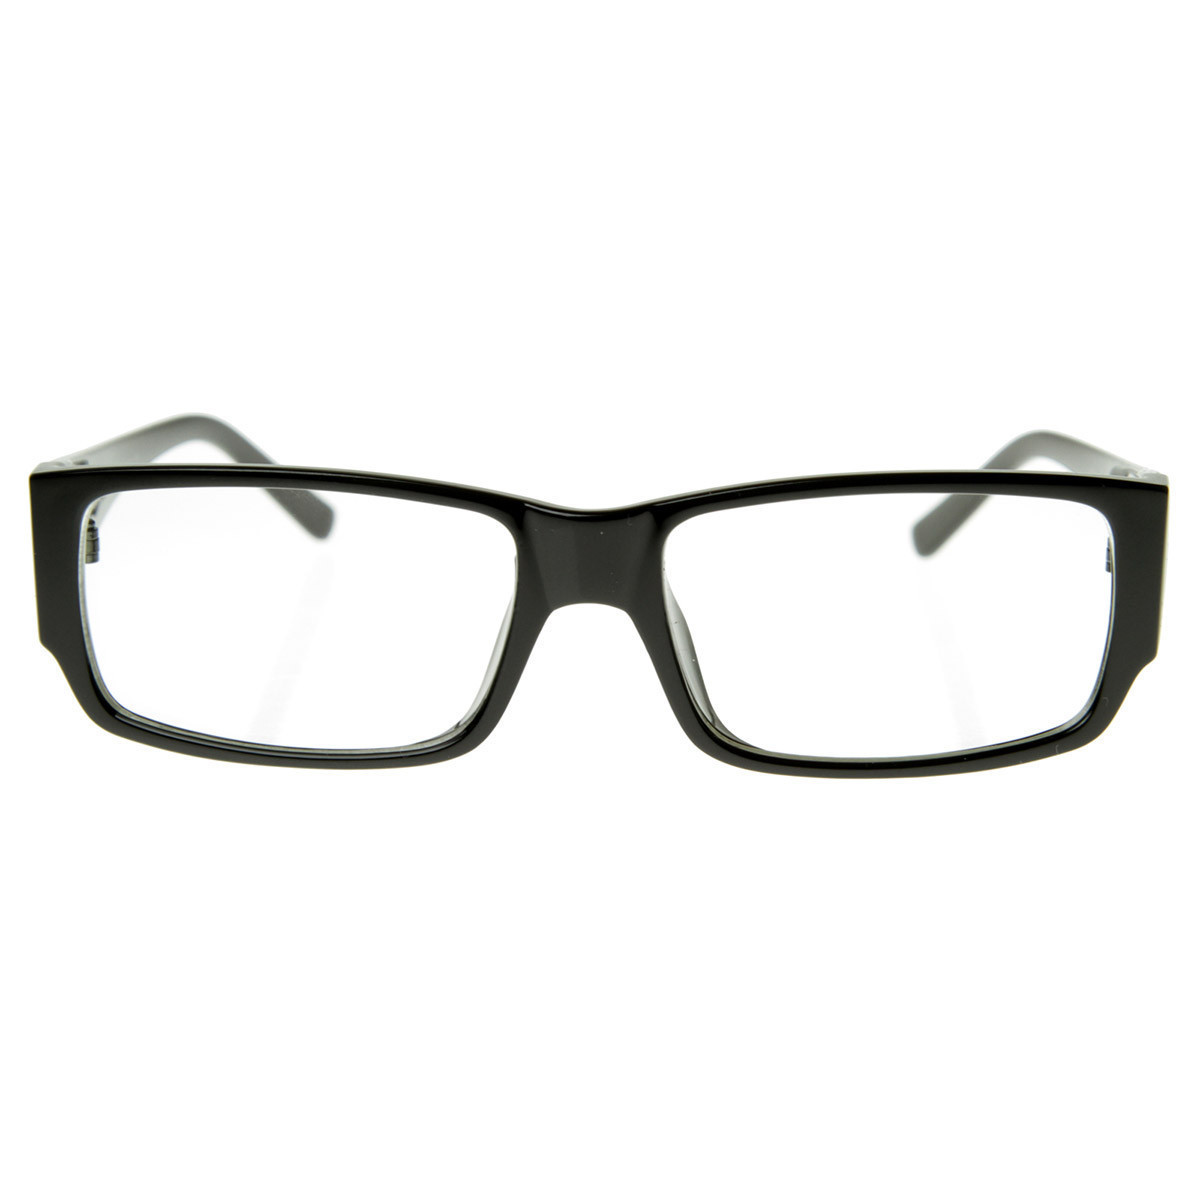 Modern Clean & Basic Rectangular Reading RX-able Clear Lens Eyewear Glasses - 8035 - Tortoise